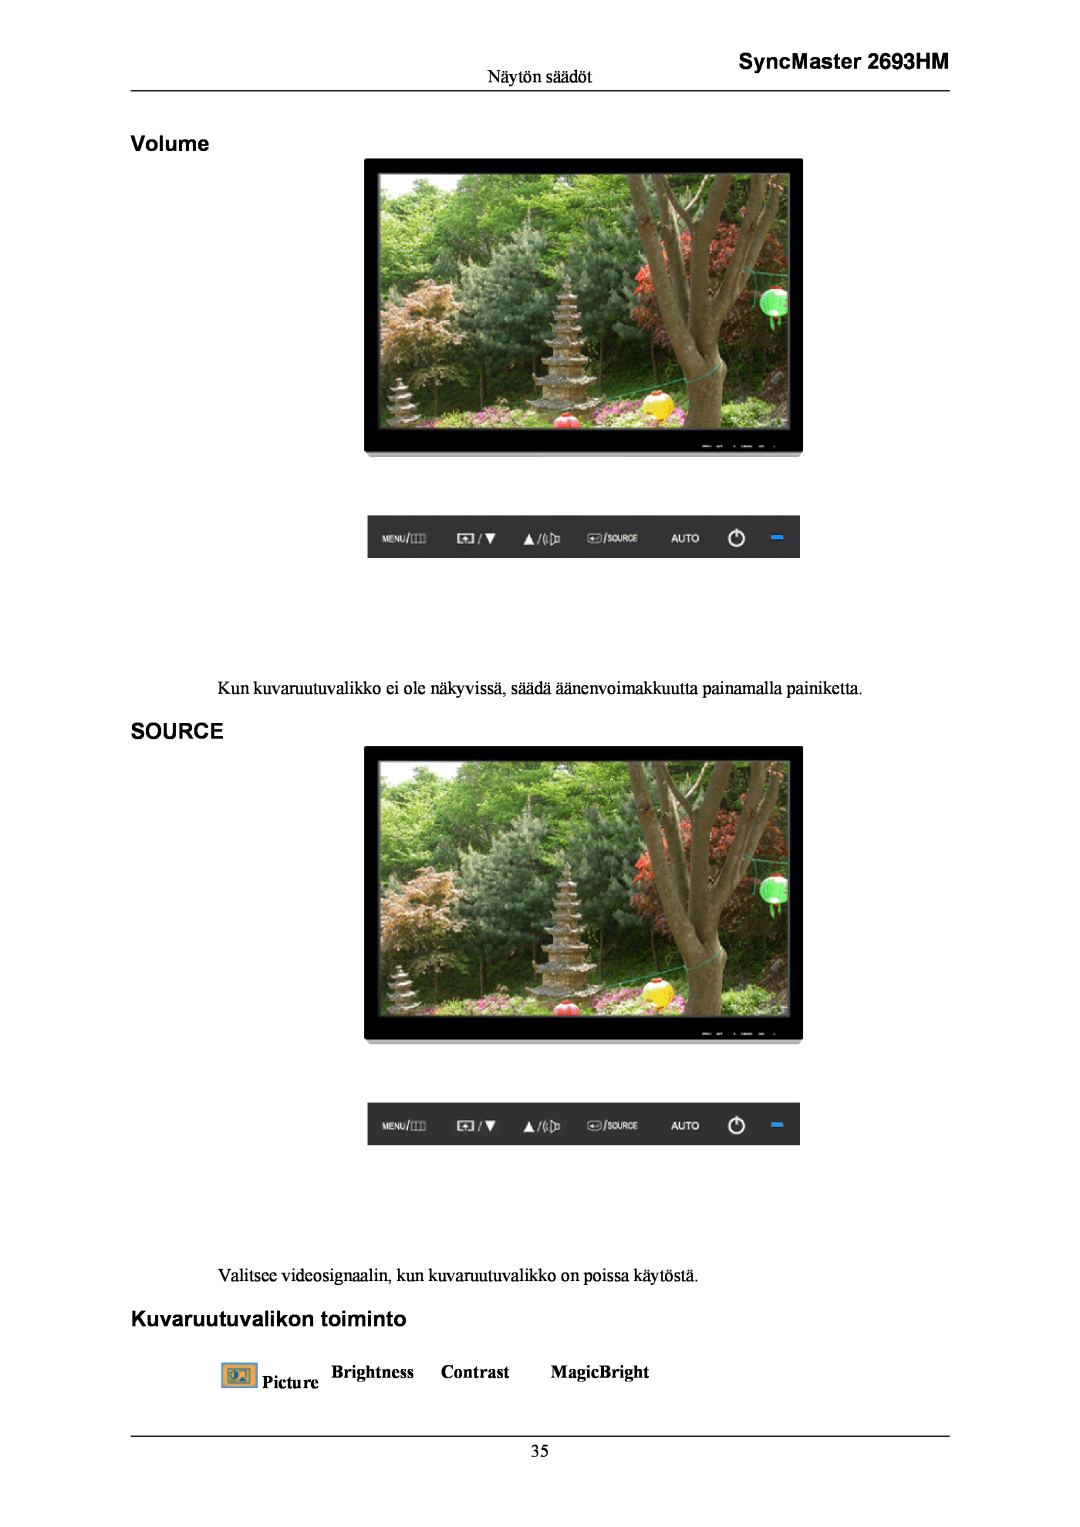 Samsung LS26KIERBV/EDC manual Volume, Source, Kuvaruutuvalikon toiminto, SyncMaster 2693HM, Picture Brightness, Contrast 